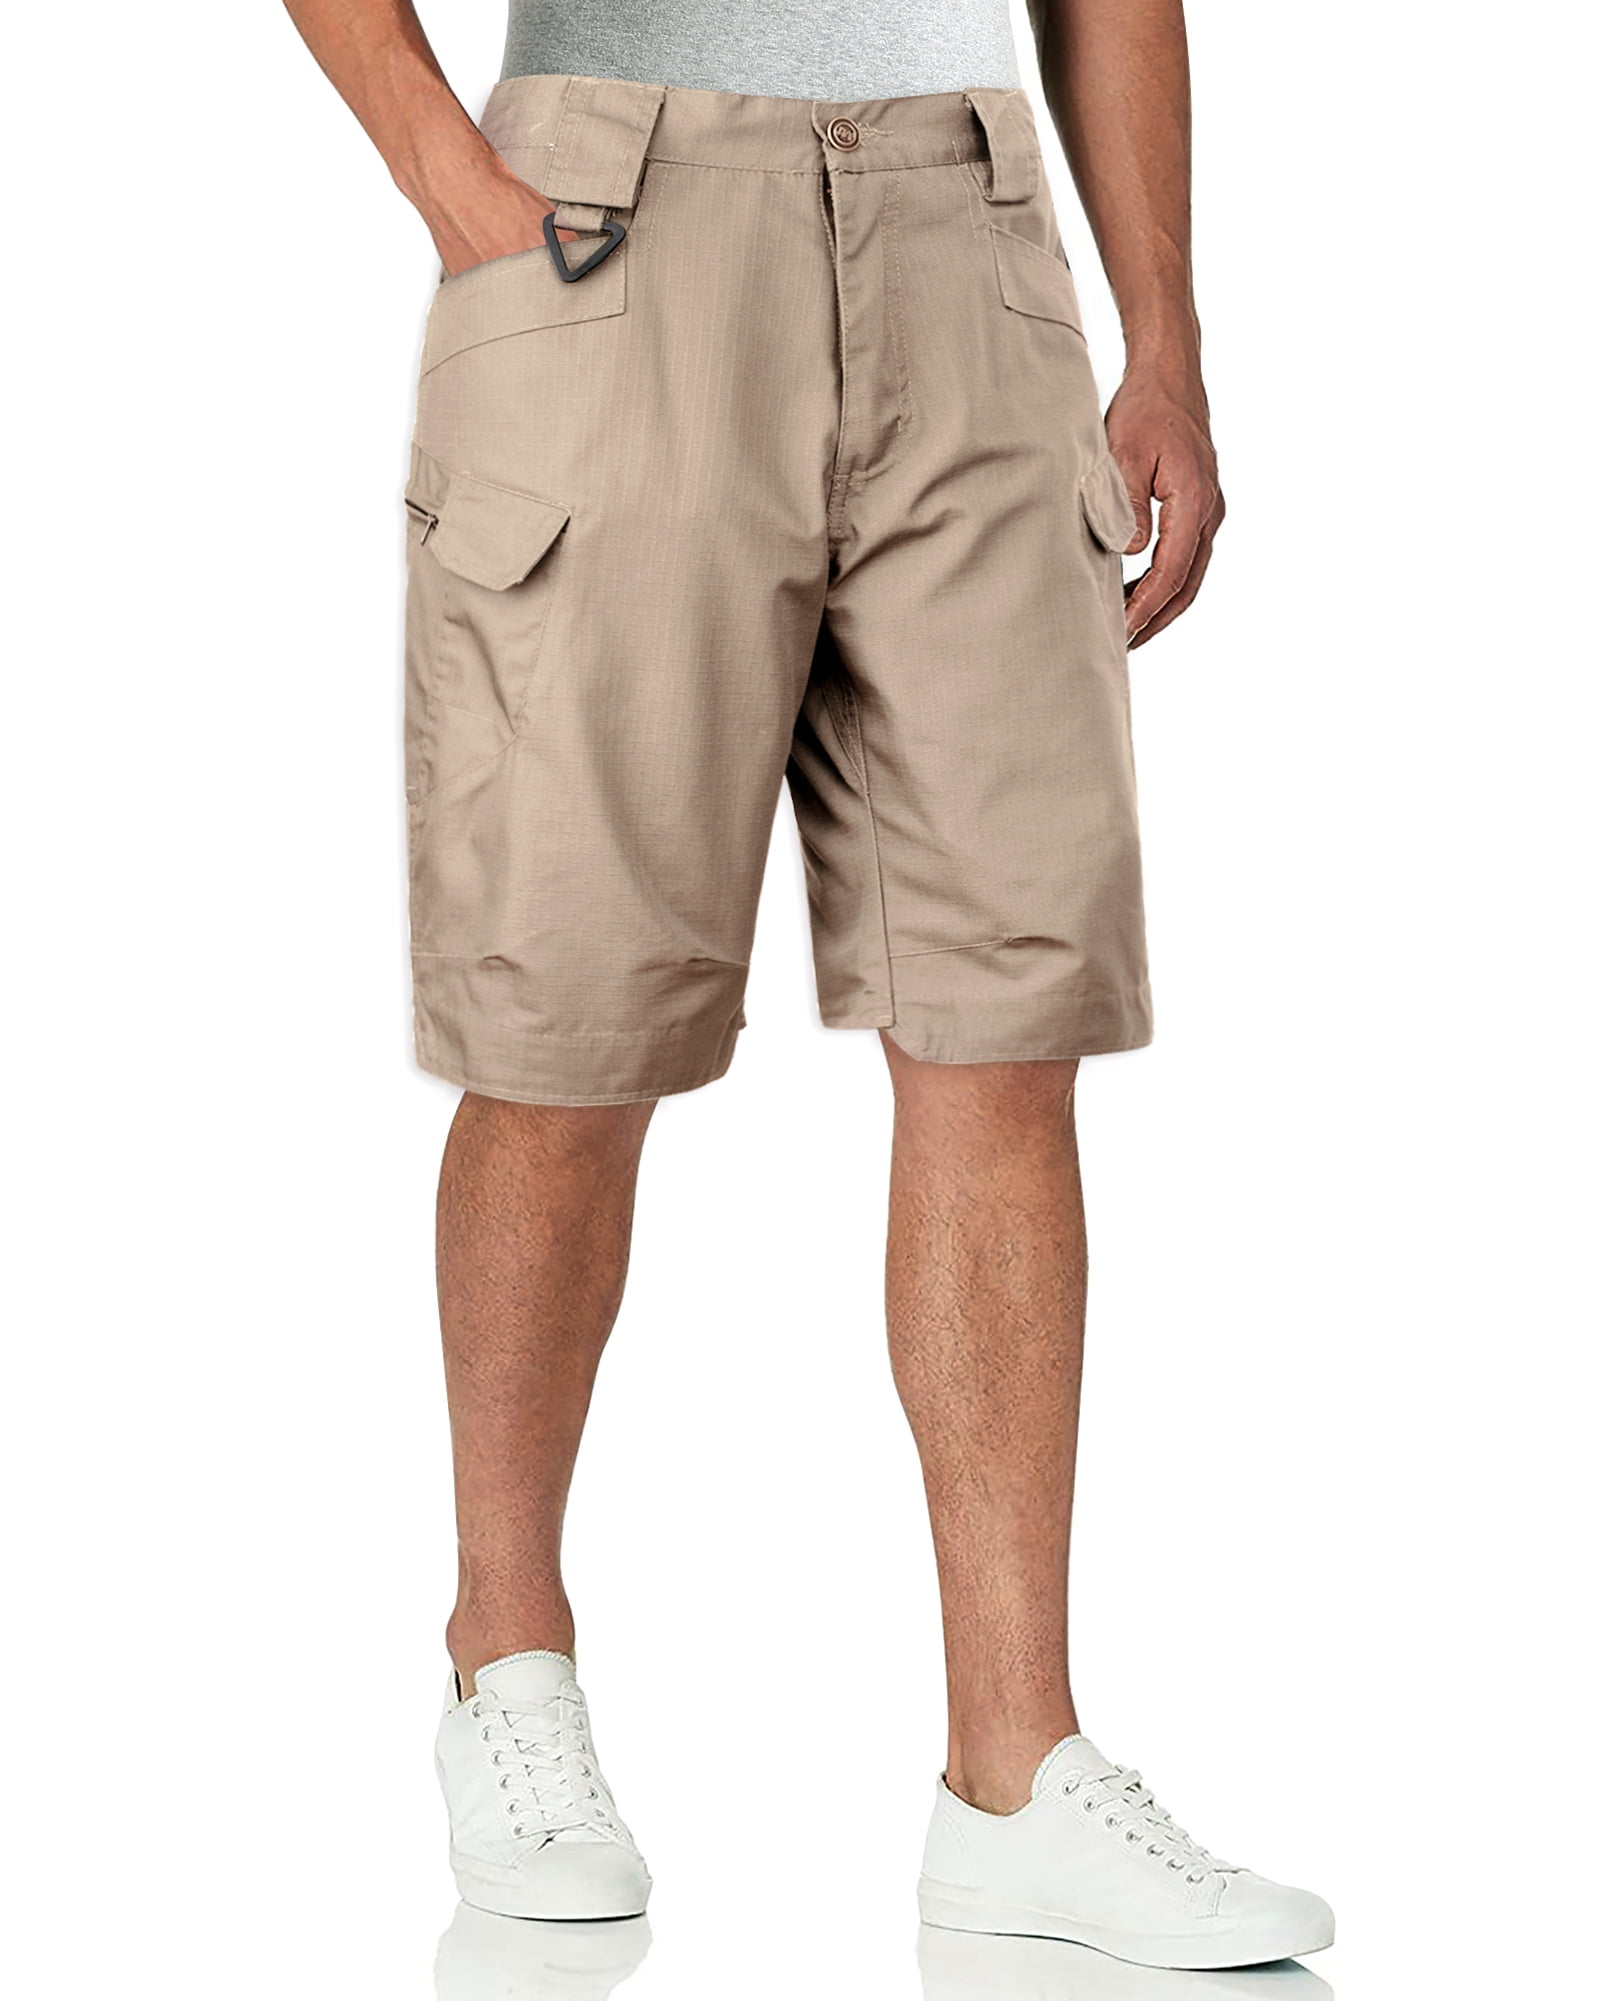 Alimens & Gentle Men's Cargo Short Elastic Waist Multi-Pocket Outdoor Military Tactical Shorts 